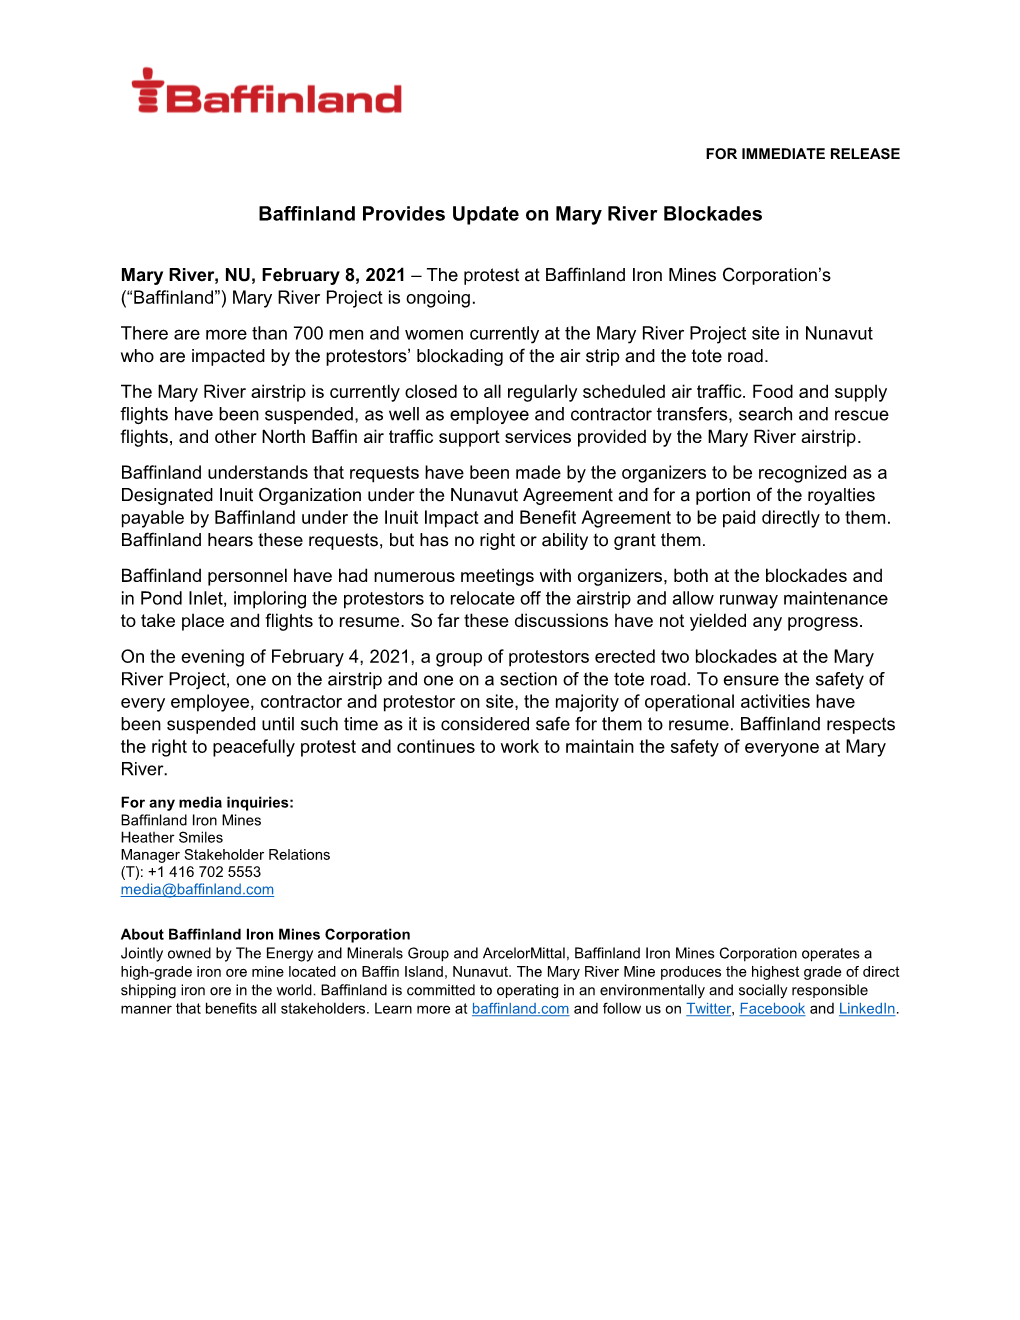 Baffinland Provides Update on Mary River Blockades